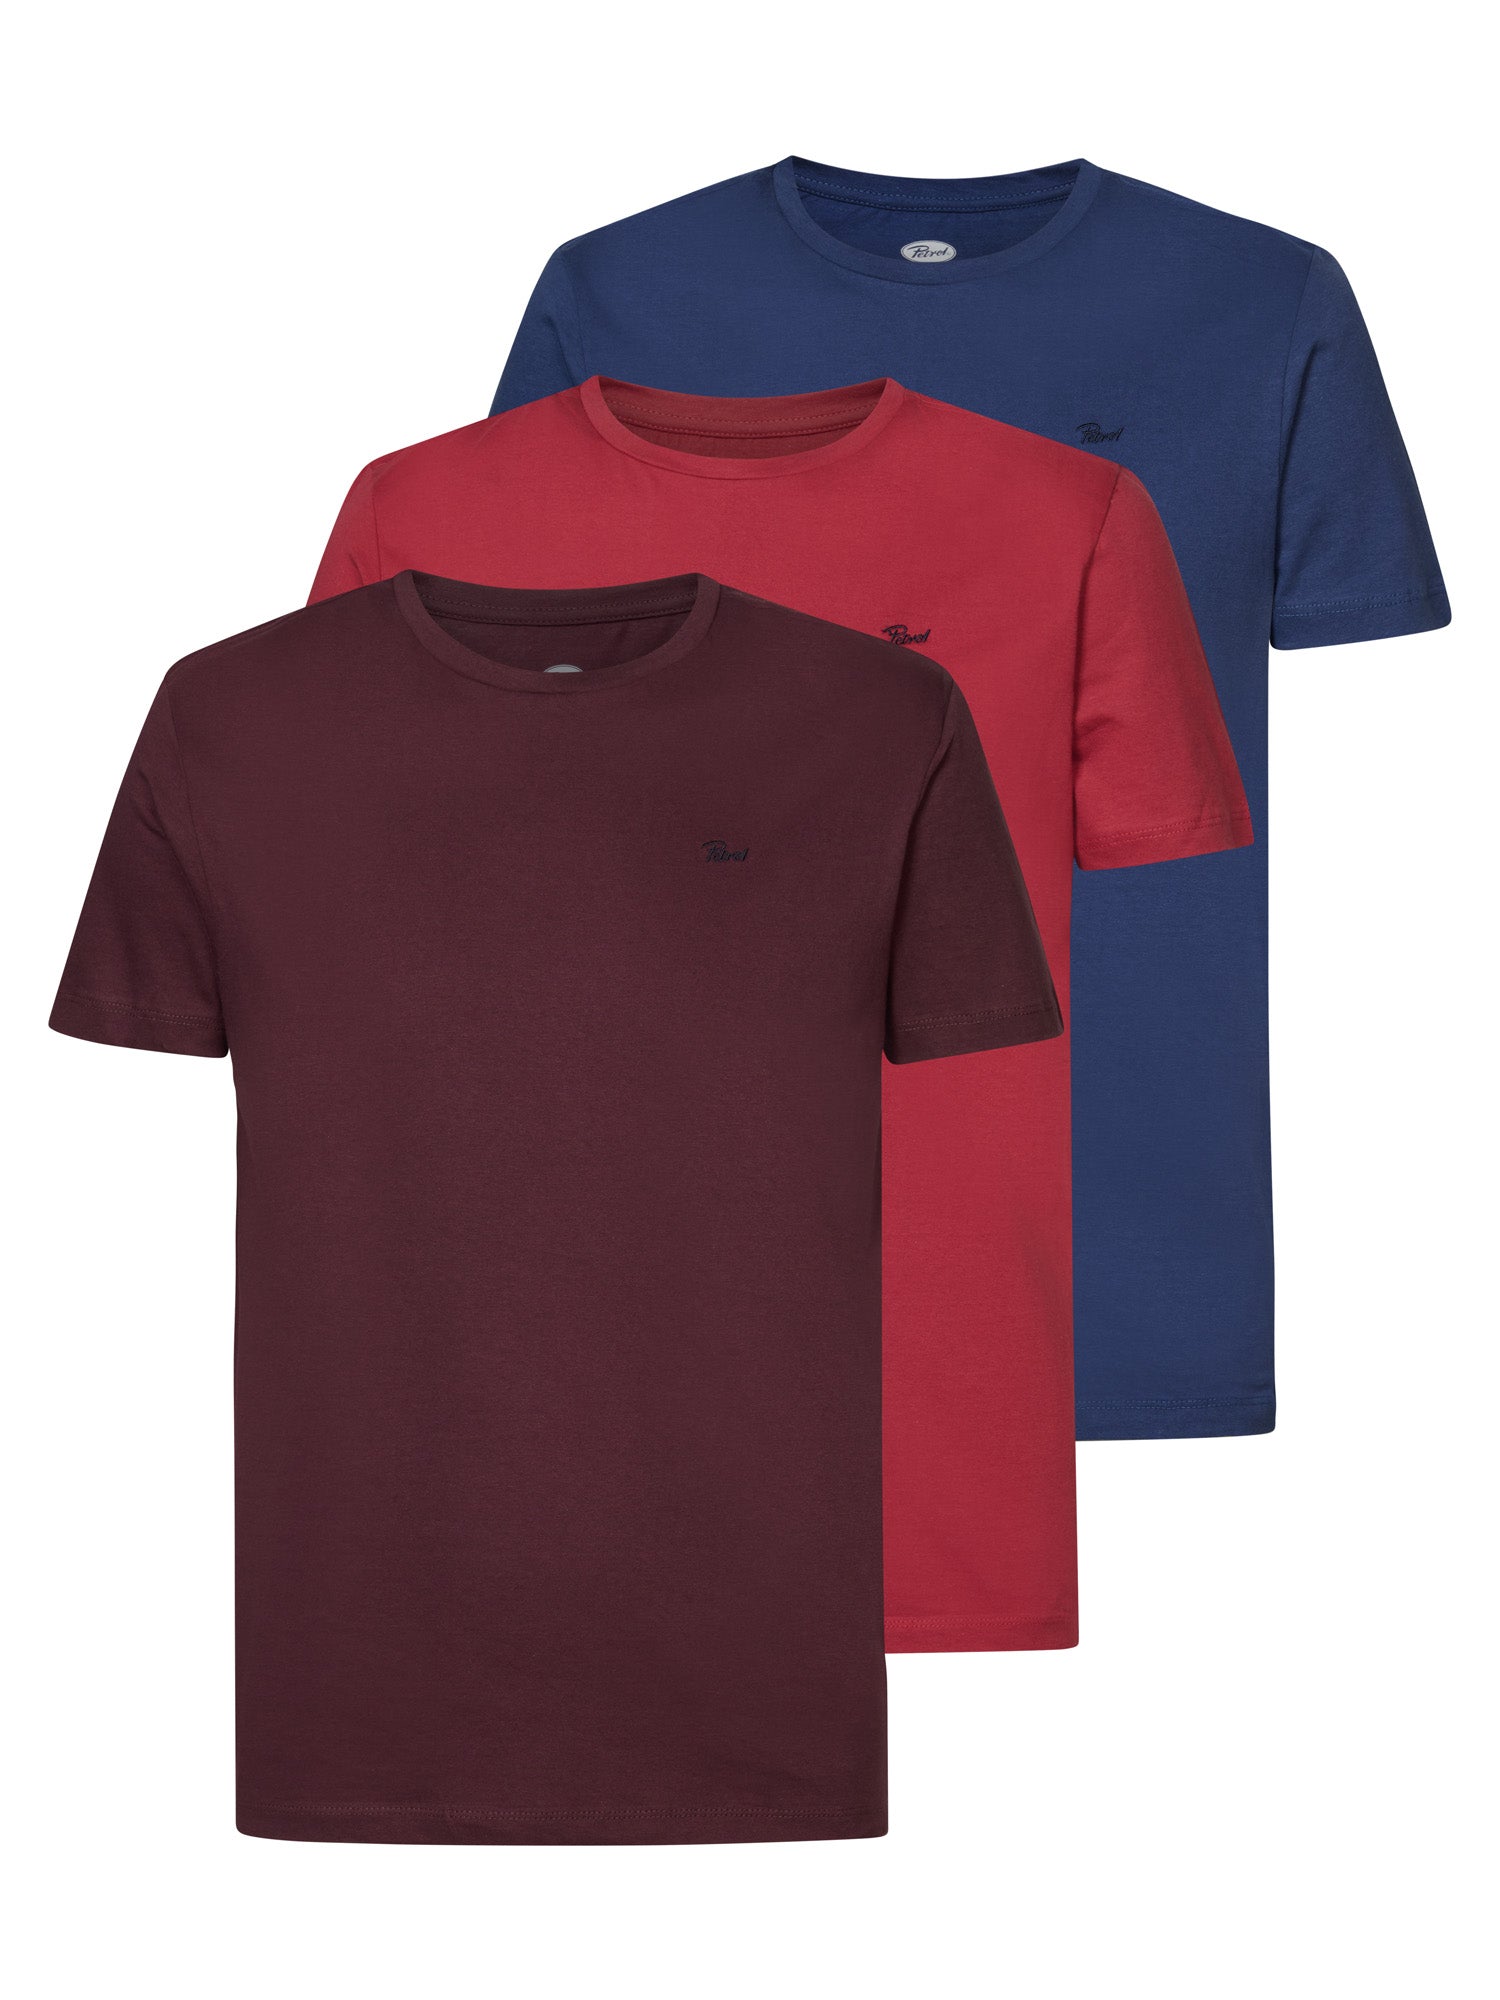 Petrol Industries 3 Pack T Shirt Burgundy/Red/Blue - XXXL